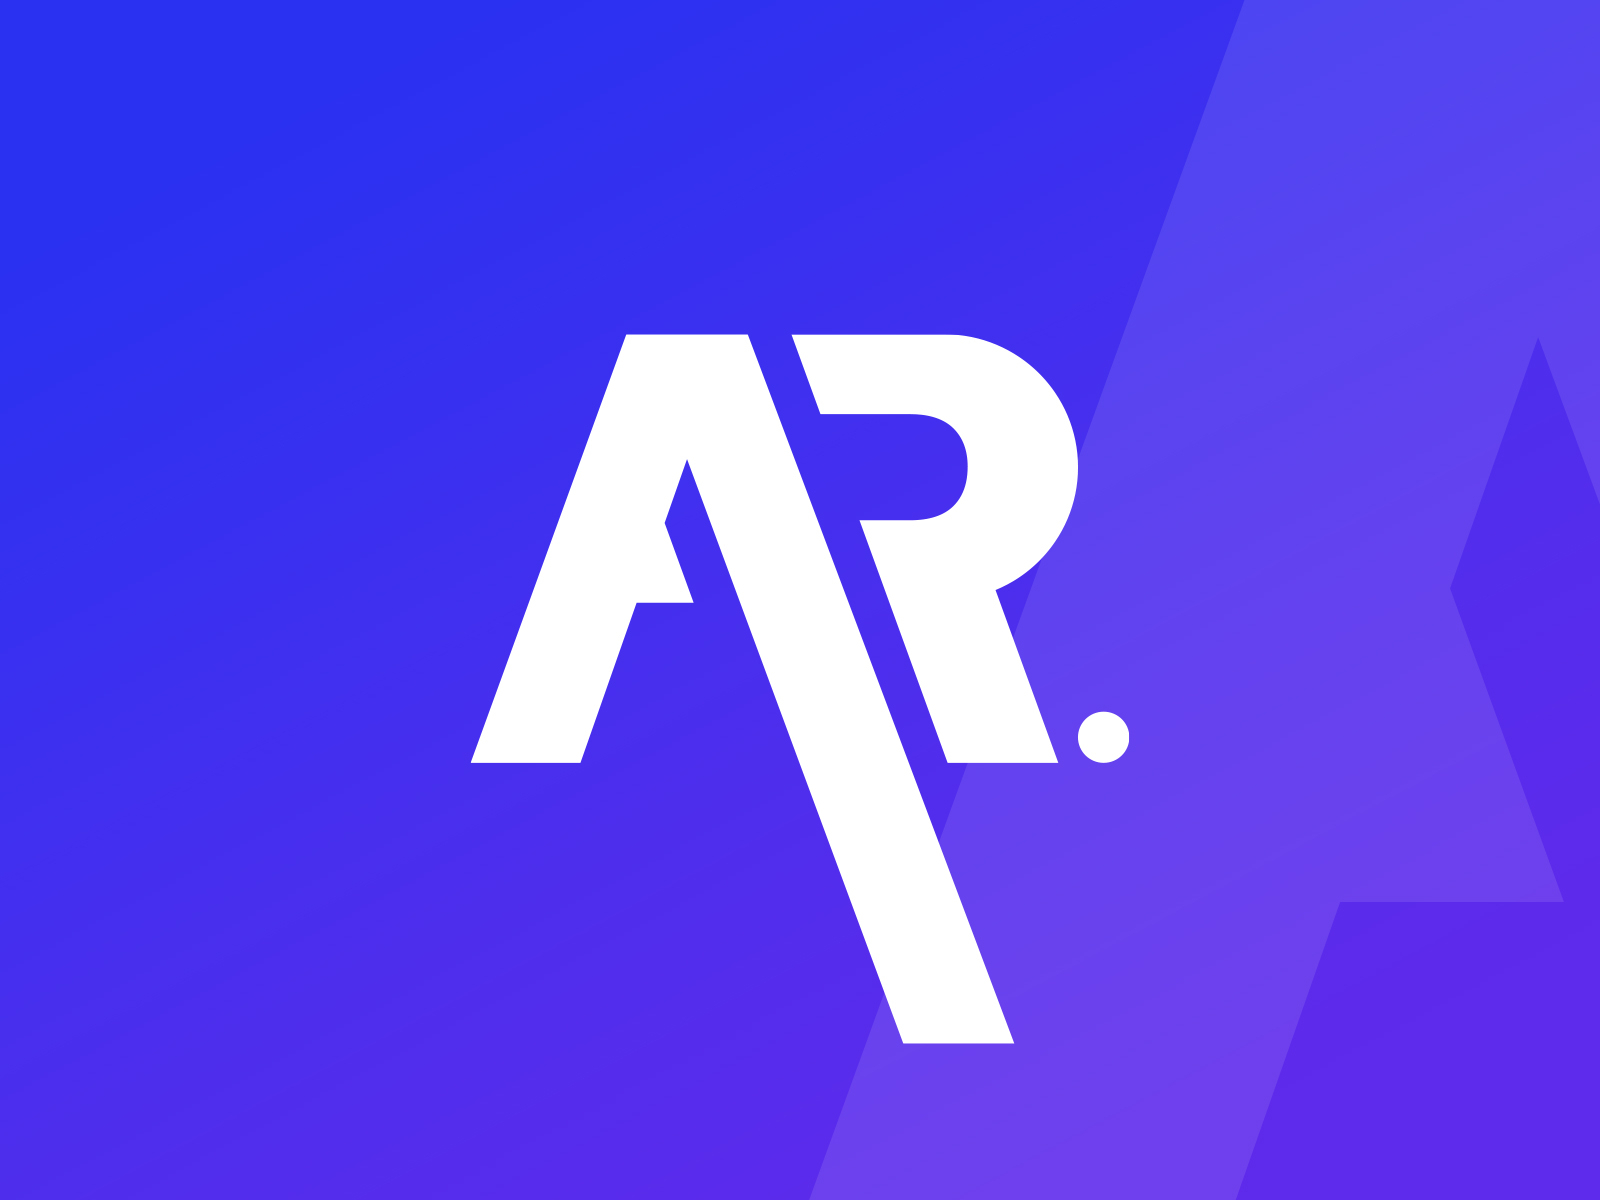 AR Logo by Anu Raj on Dribbble